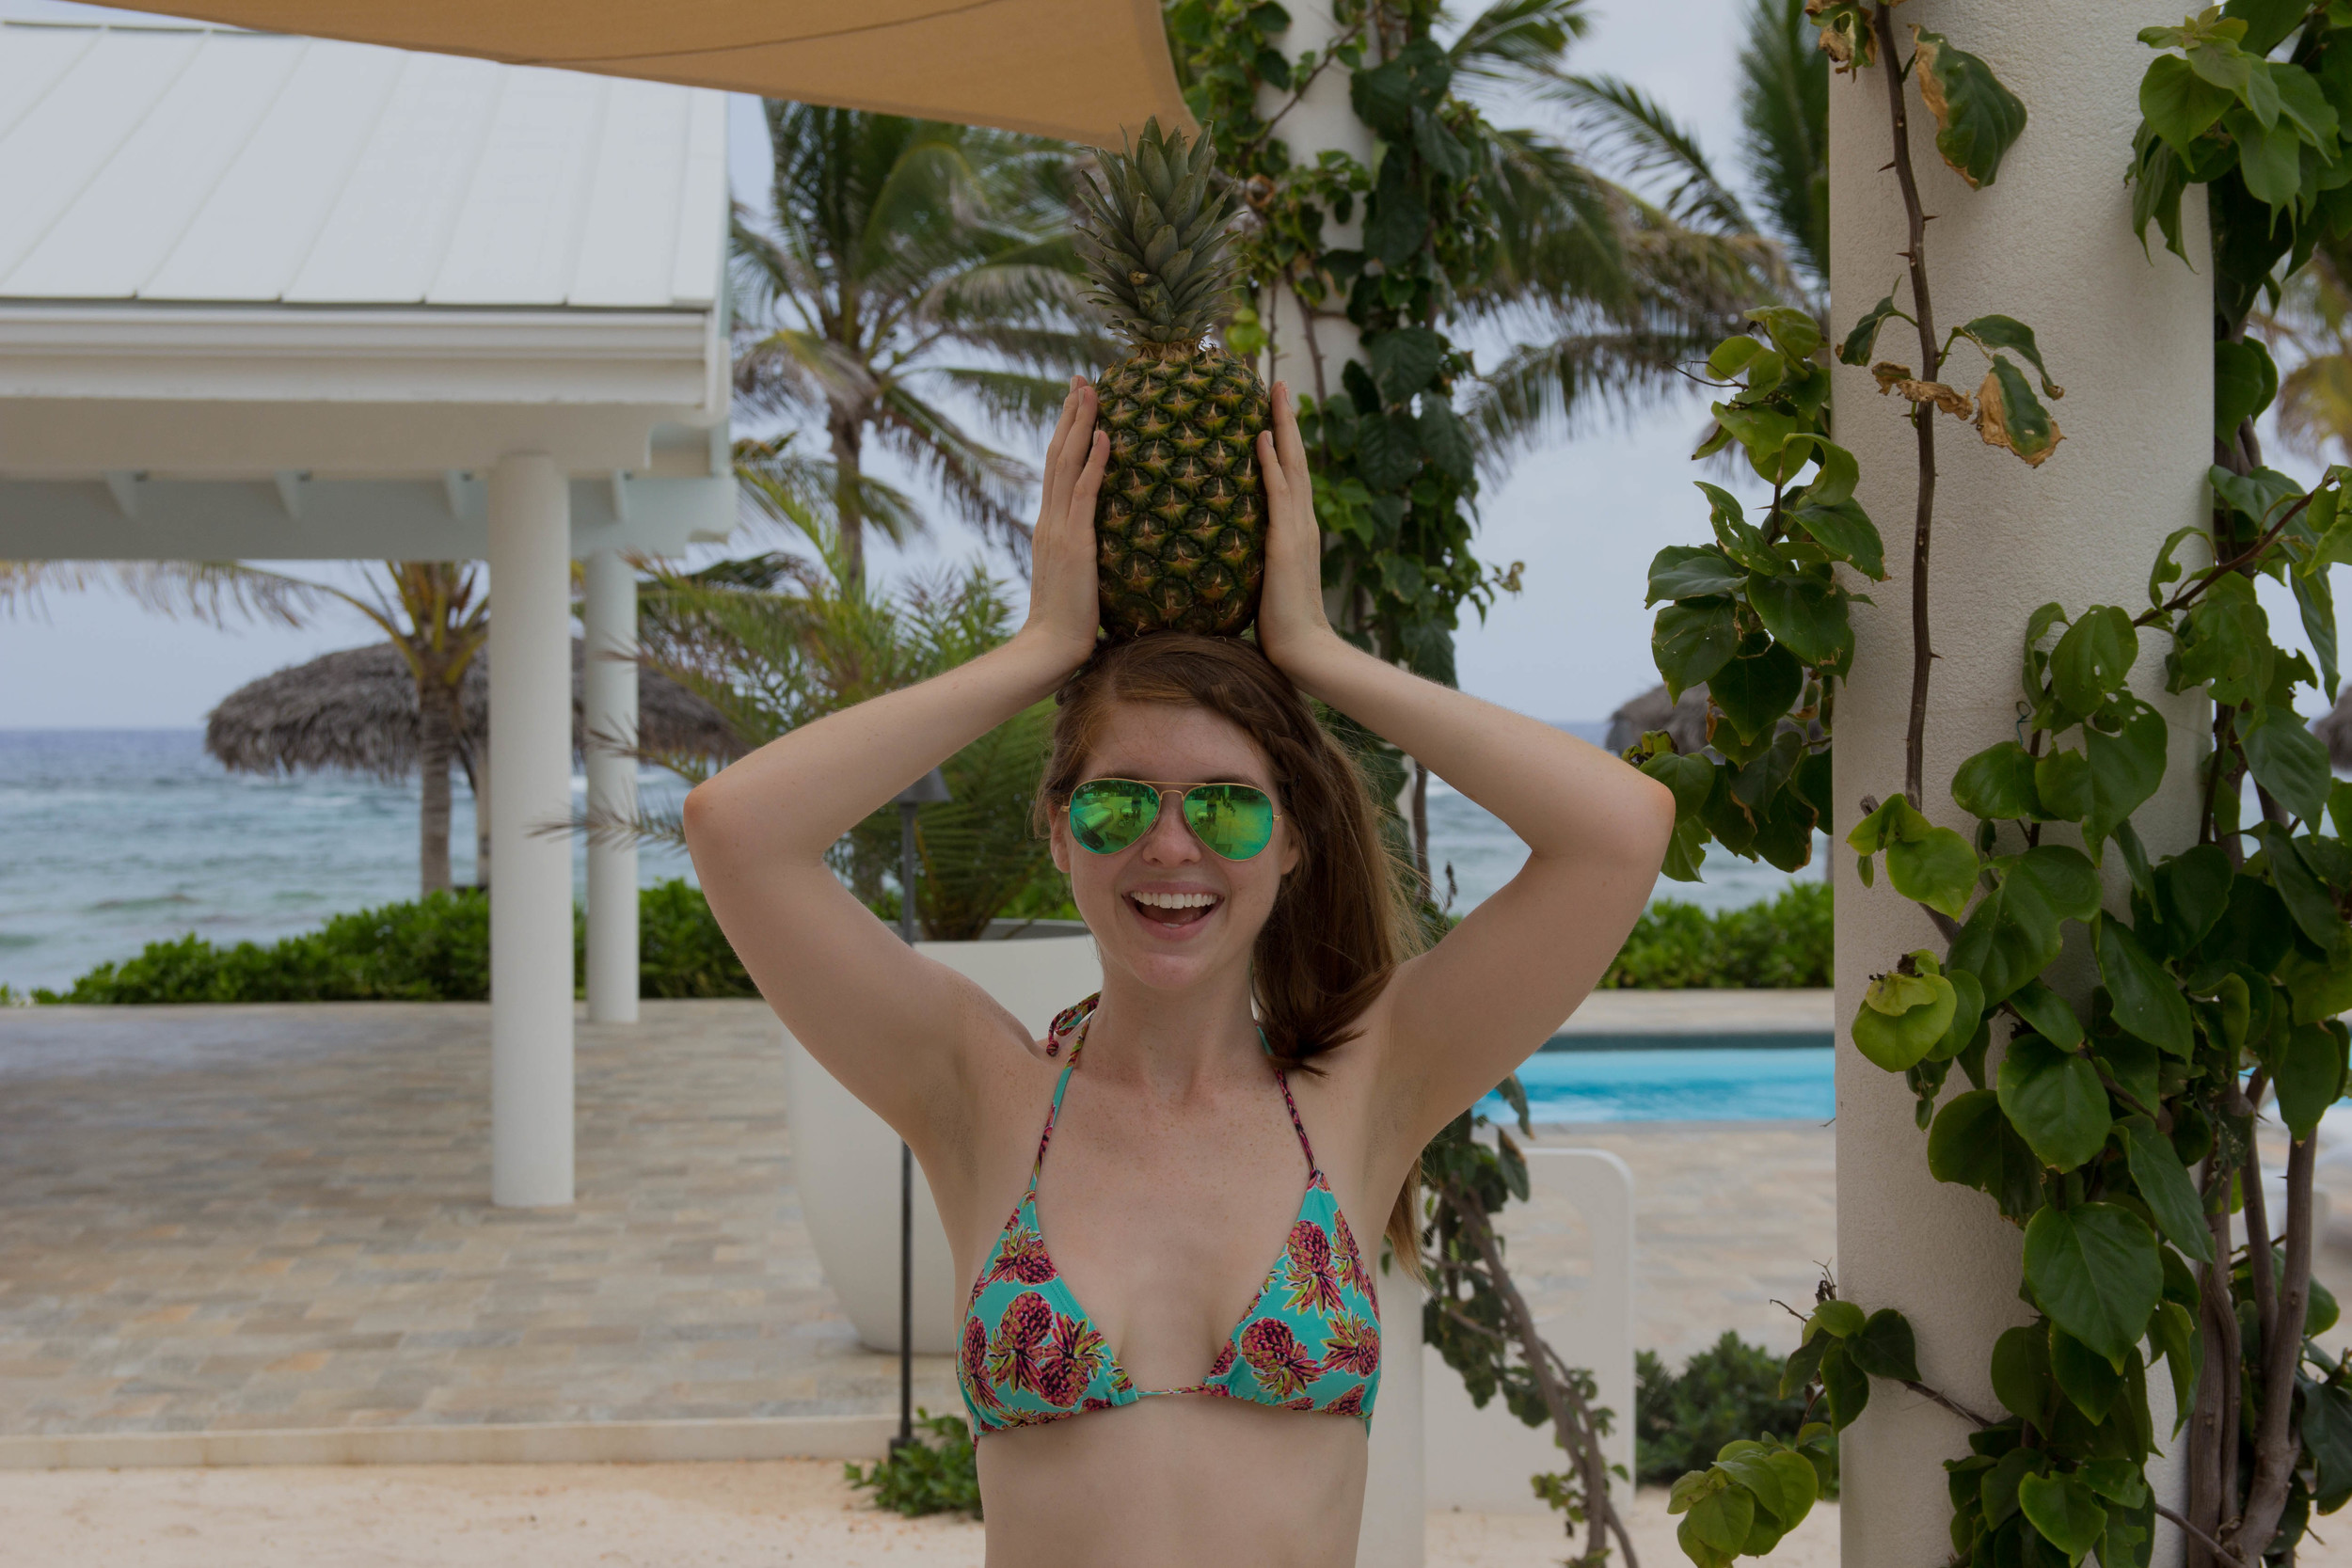 le soleil d'or, cayman brac, grand cayman islands, caribbean islands, vacation, farm, fresh, organic, mimosas, beach, bcbg panama hat, all for color pineapple bikini, rayban mirrored aviators